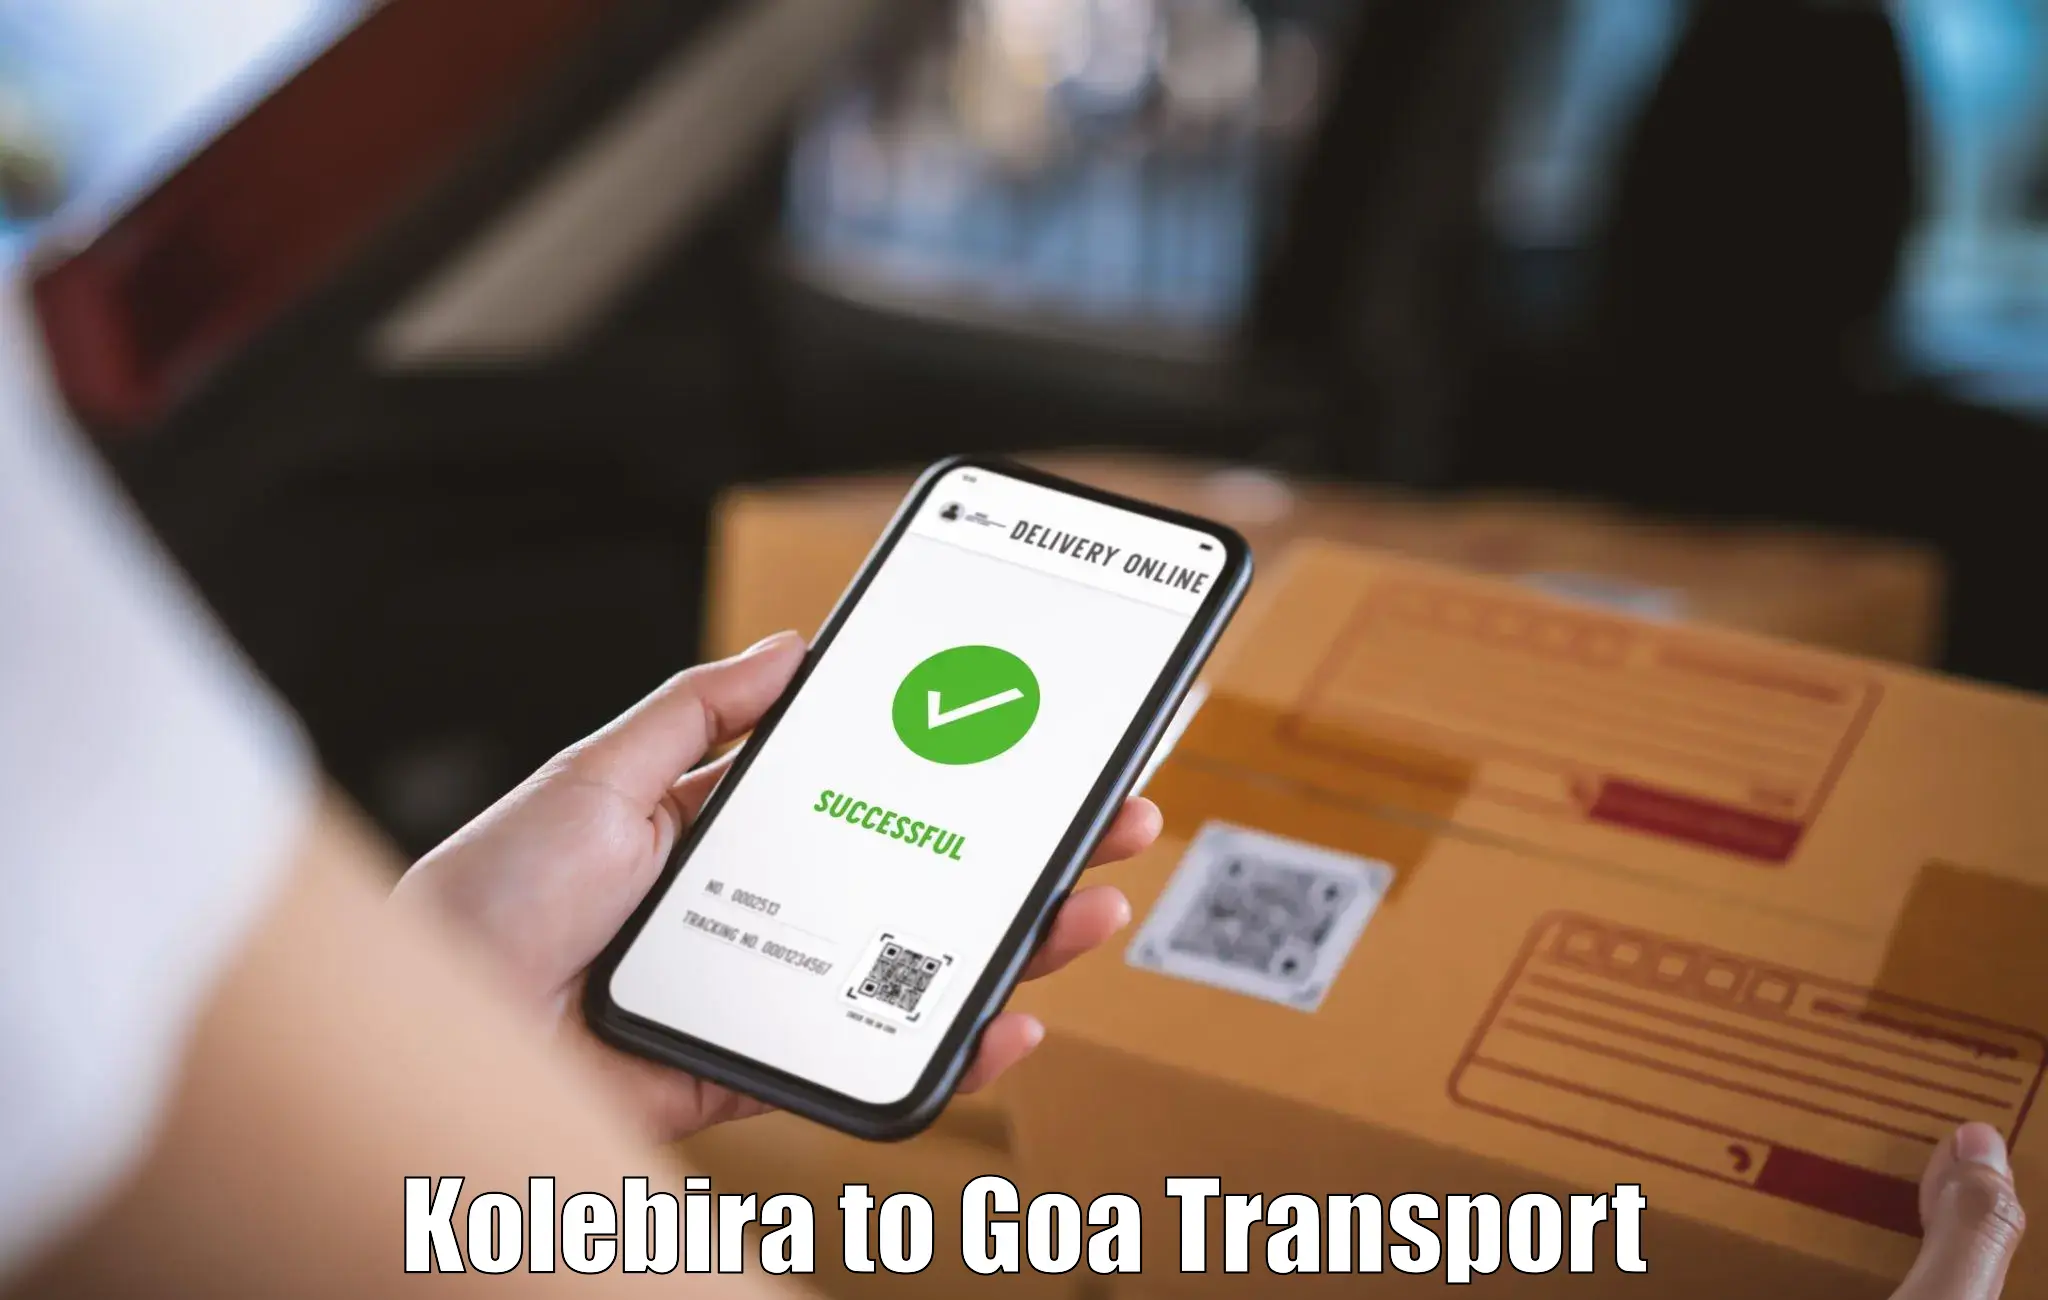 Transport in sharing Kolebira to Goa